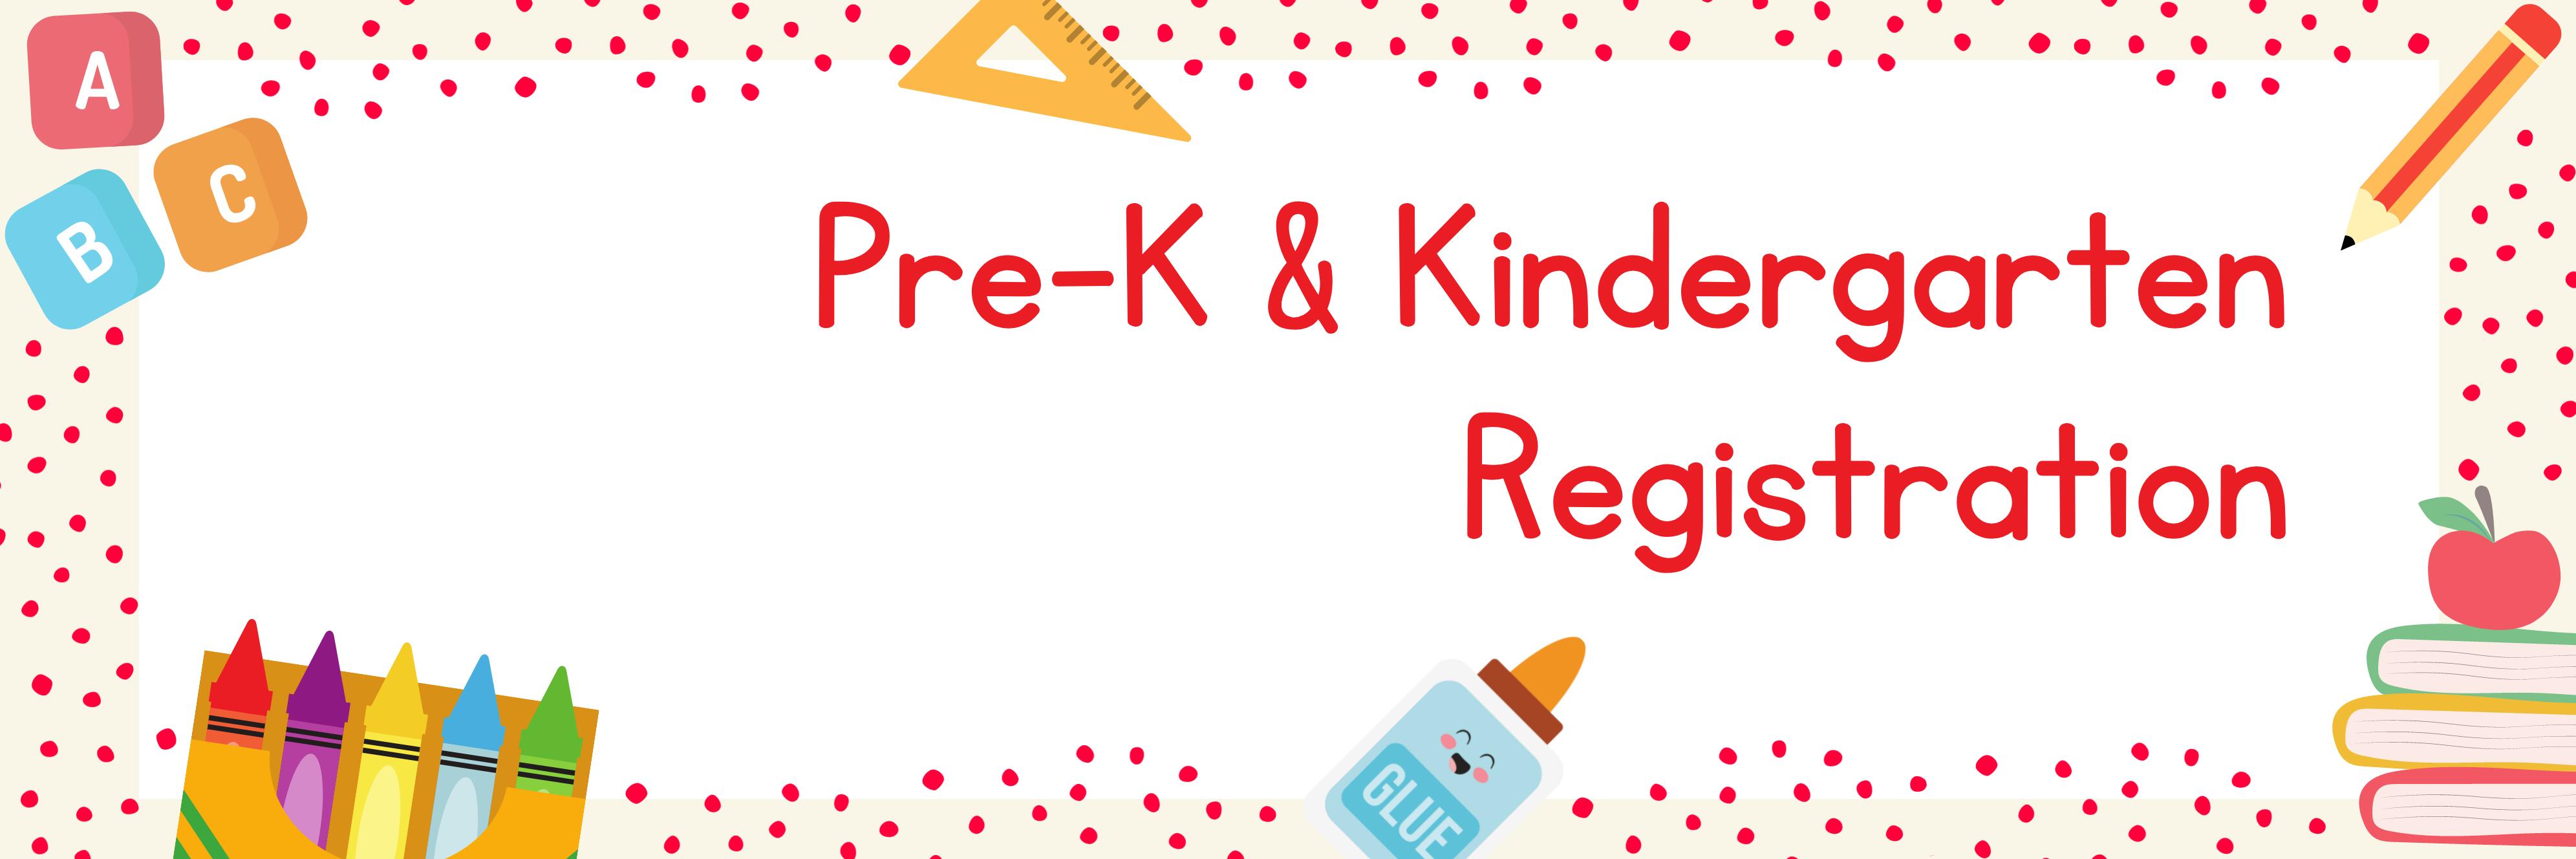 Pre-K and Kindergarten Registration Text on School Supplies background